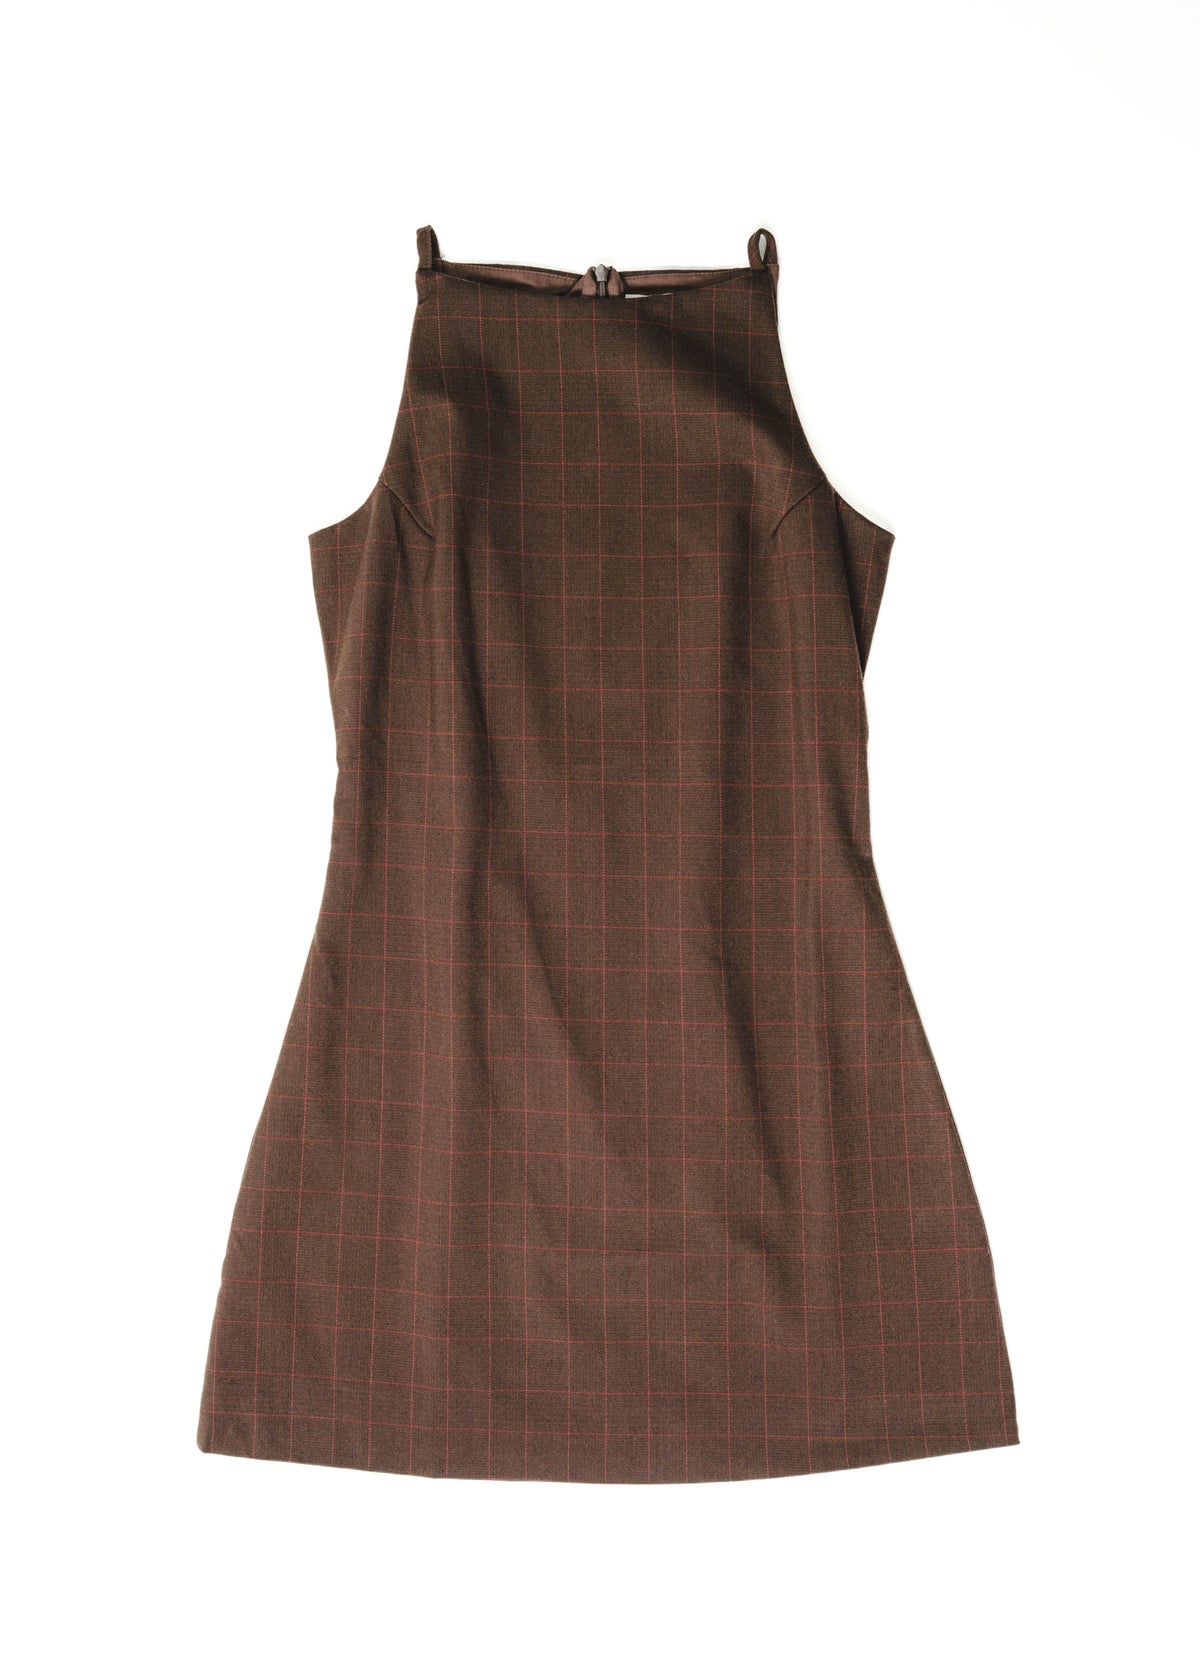 THRILLS - Alessia Mini Dress - Burnt Chestnut - Hardpressed Print Studio Inc.